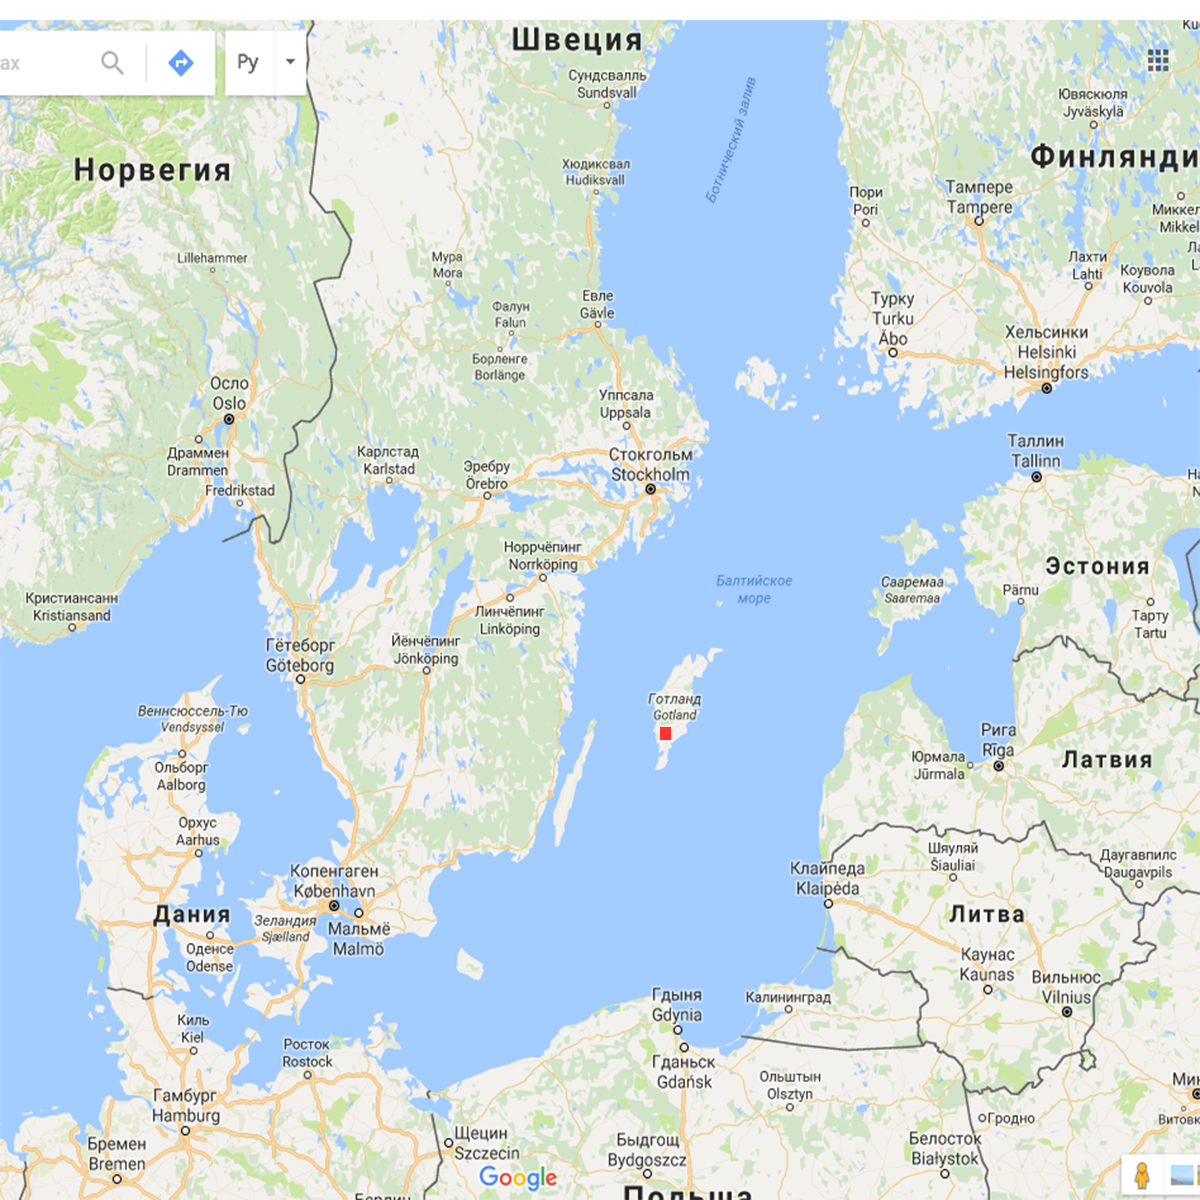 Какая страна расположена на балтийском море. Остров Готланд на карте Балтийского моря. Готланд в Балтийском море. Готланд остров в Балтийском море на карте. О Готланд на карте Балтийского моря.